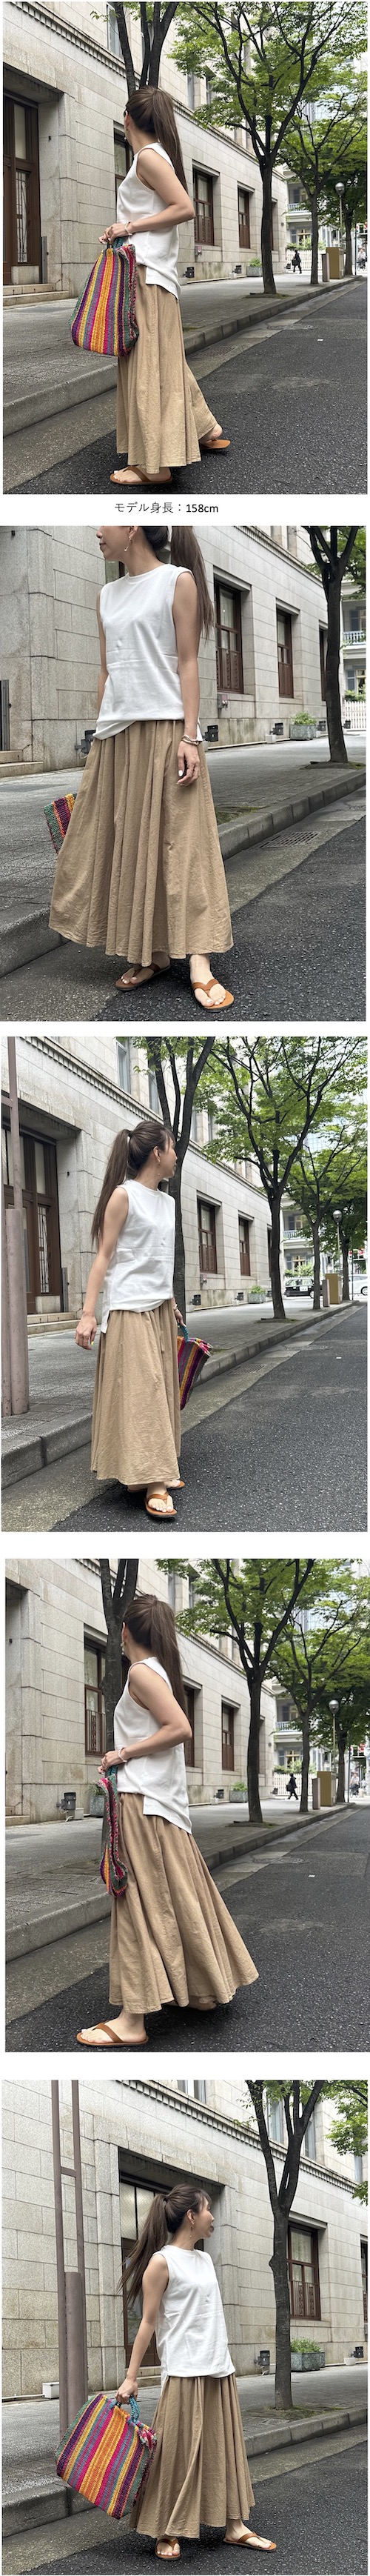 ulu Original cotton flare long skirt